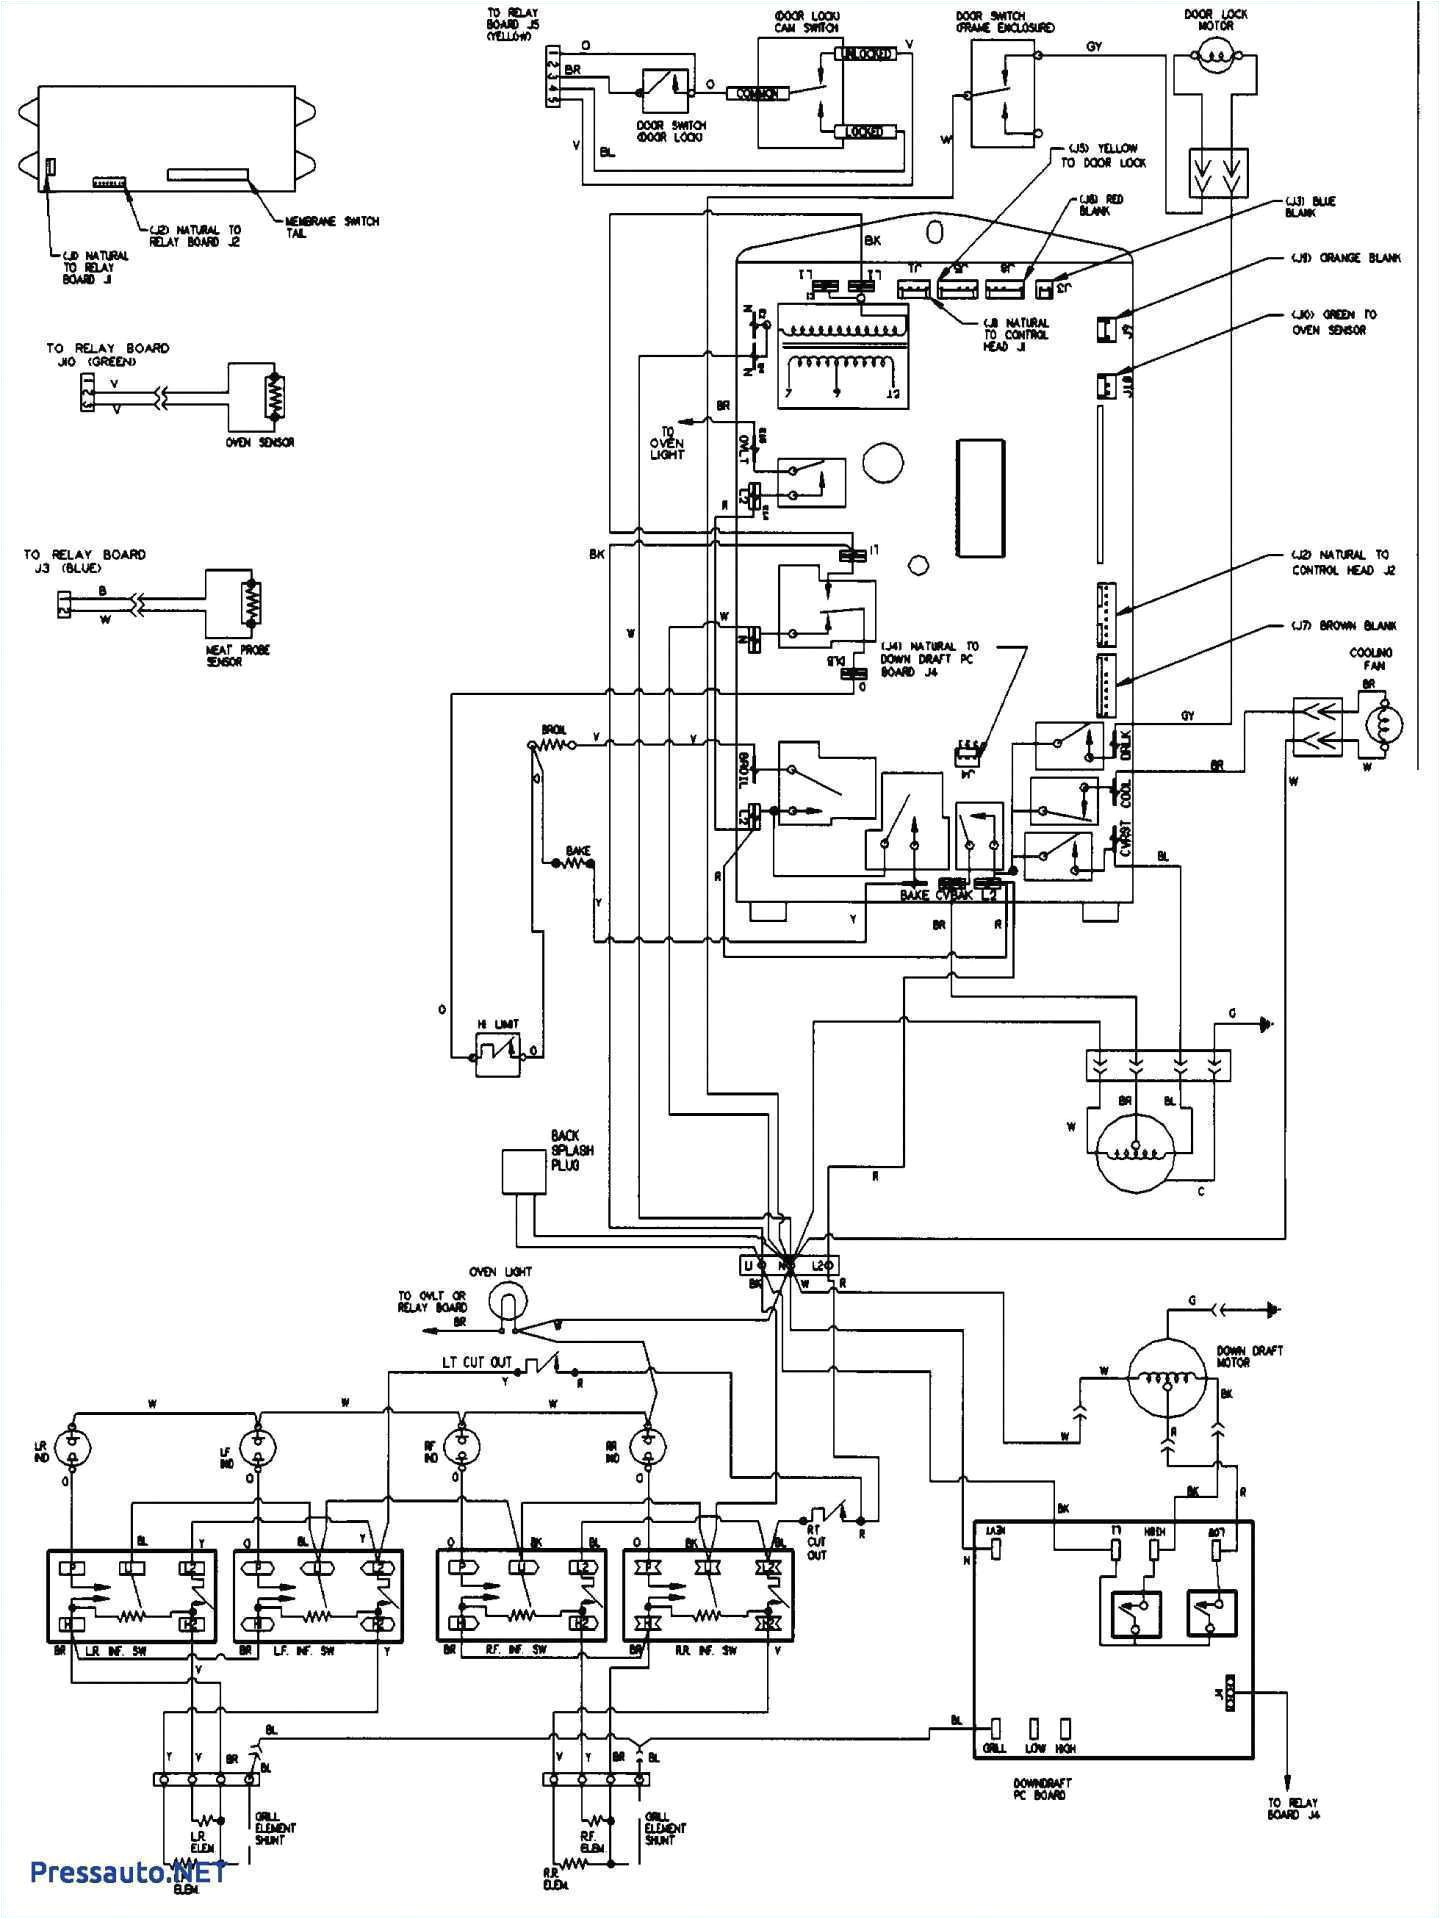 e1eh 015ha wiring diagram new e1eh 015ha wiring diagram elegant e1eh 015ha wiring diagram